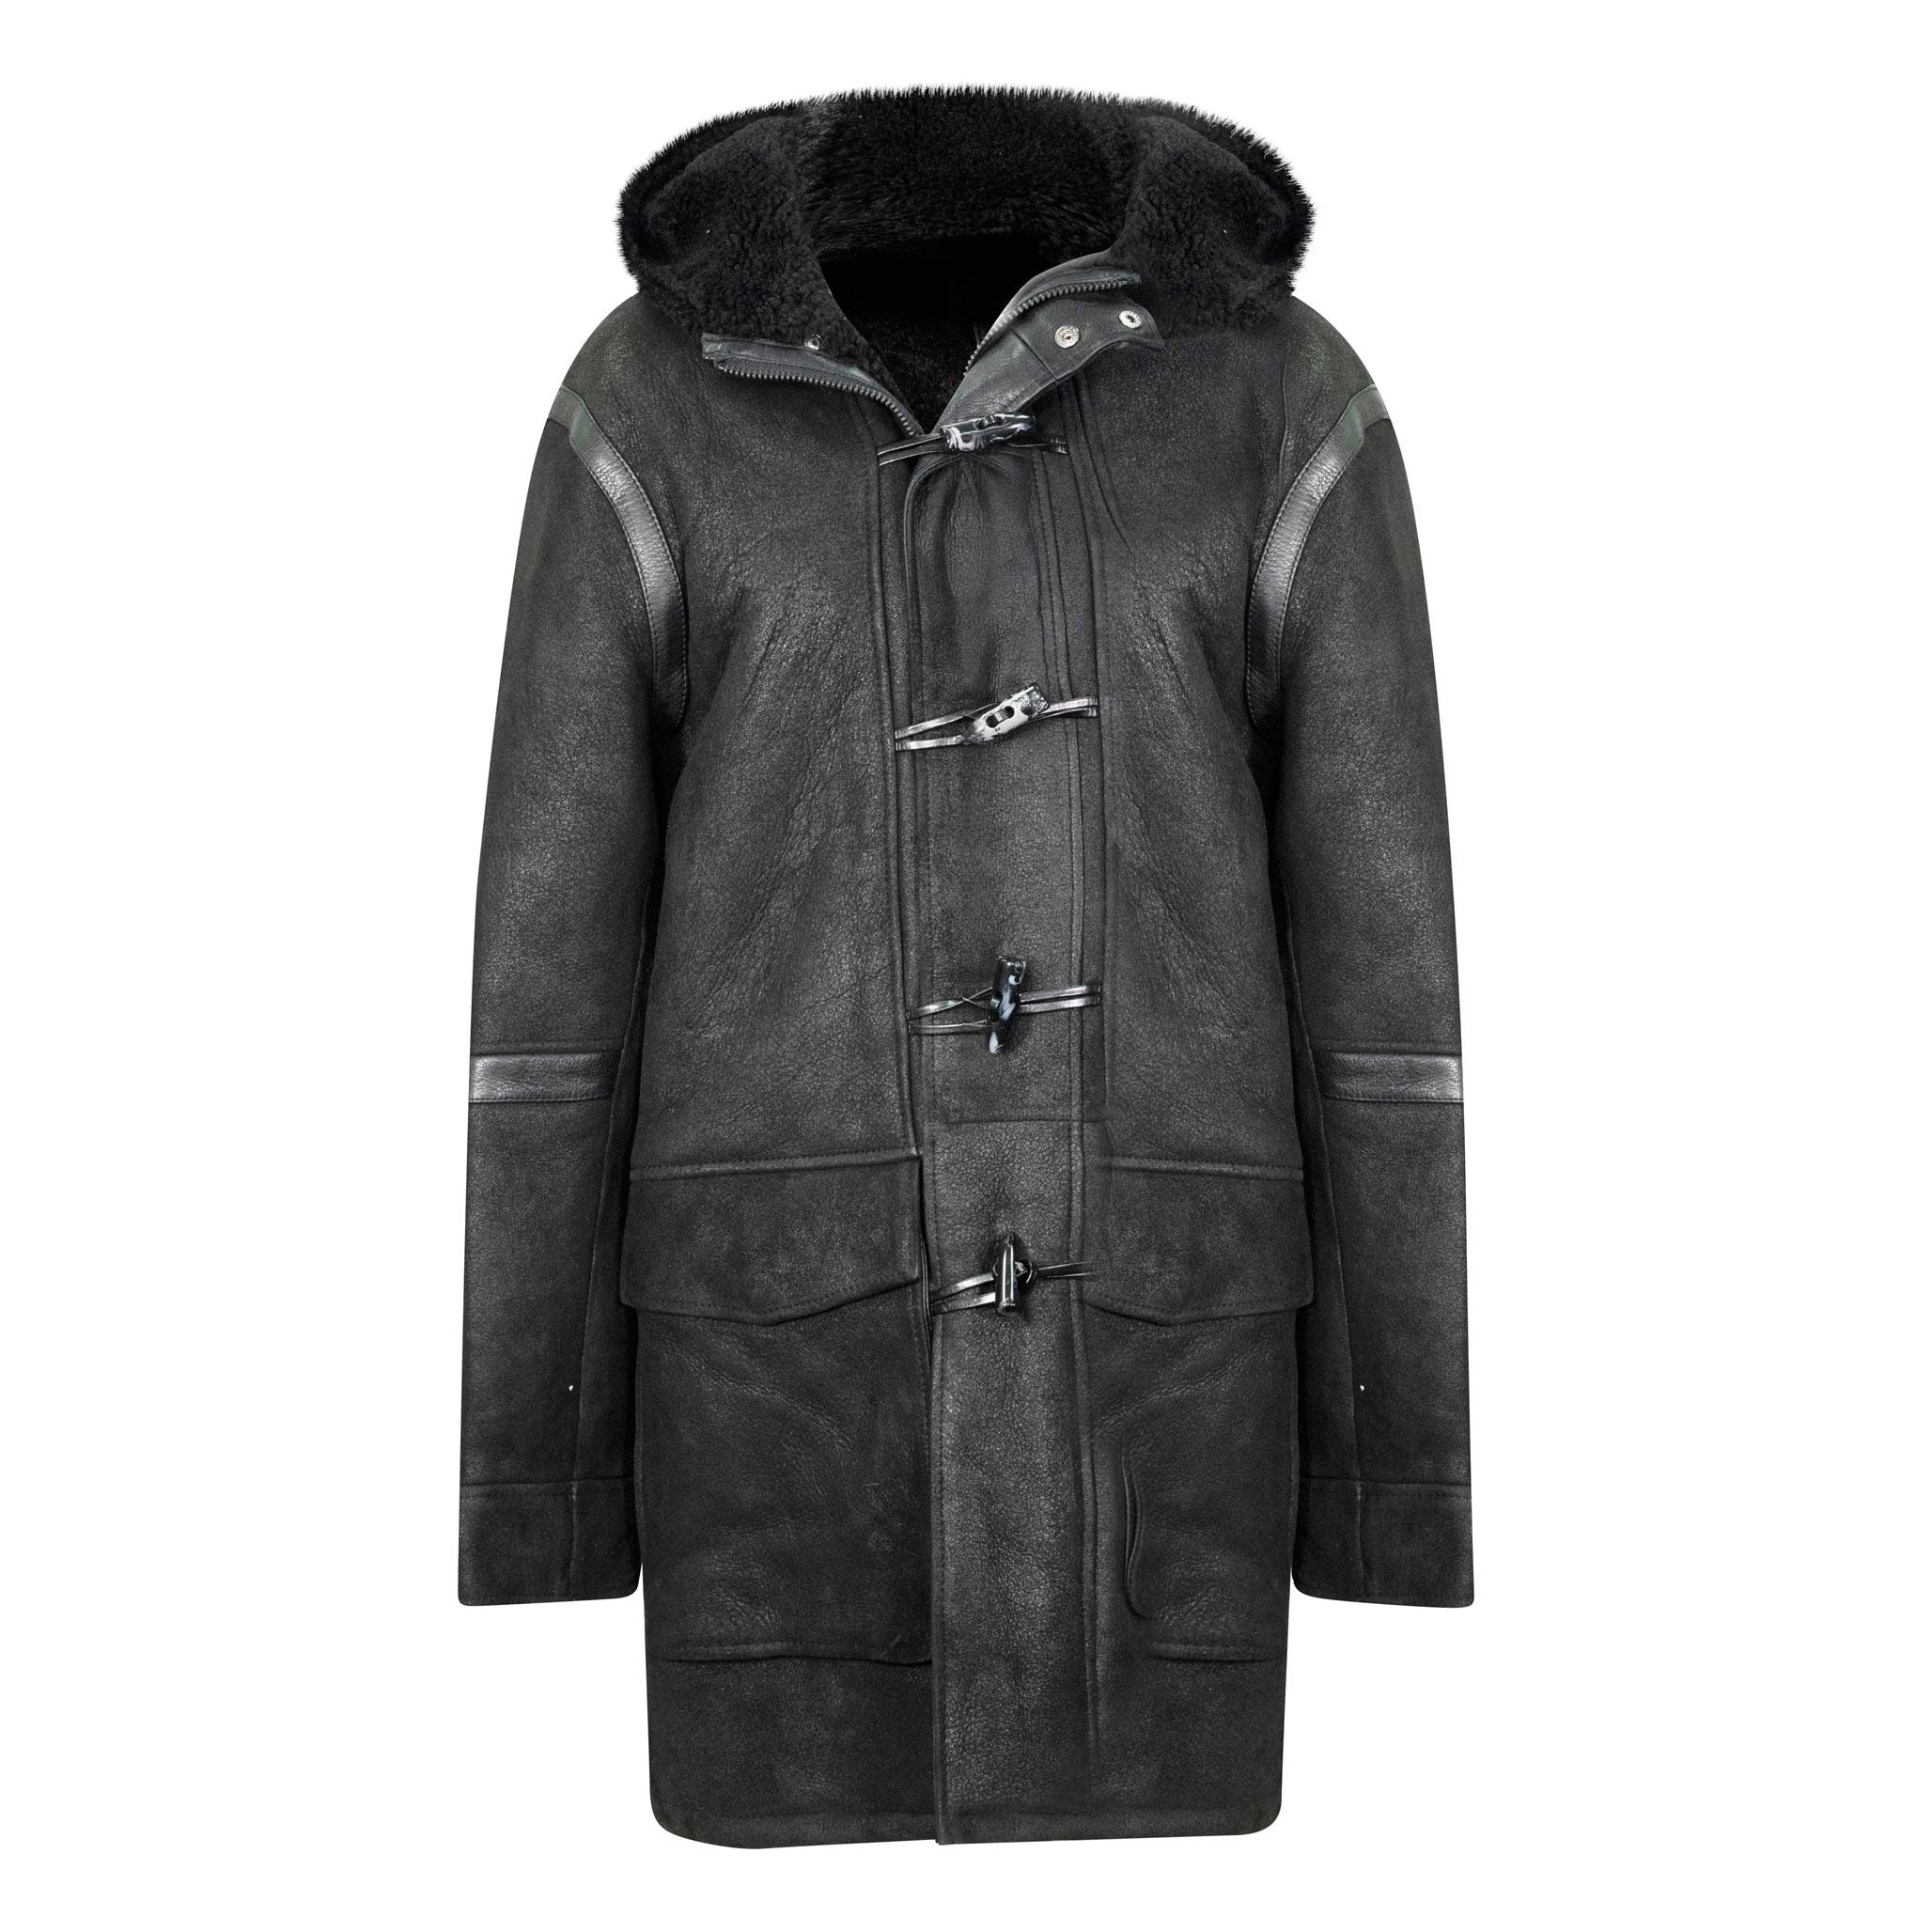 A 3/4 Length Mens Duffle Sheepskin coat in black